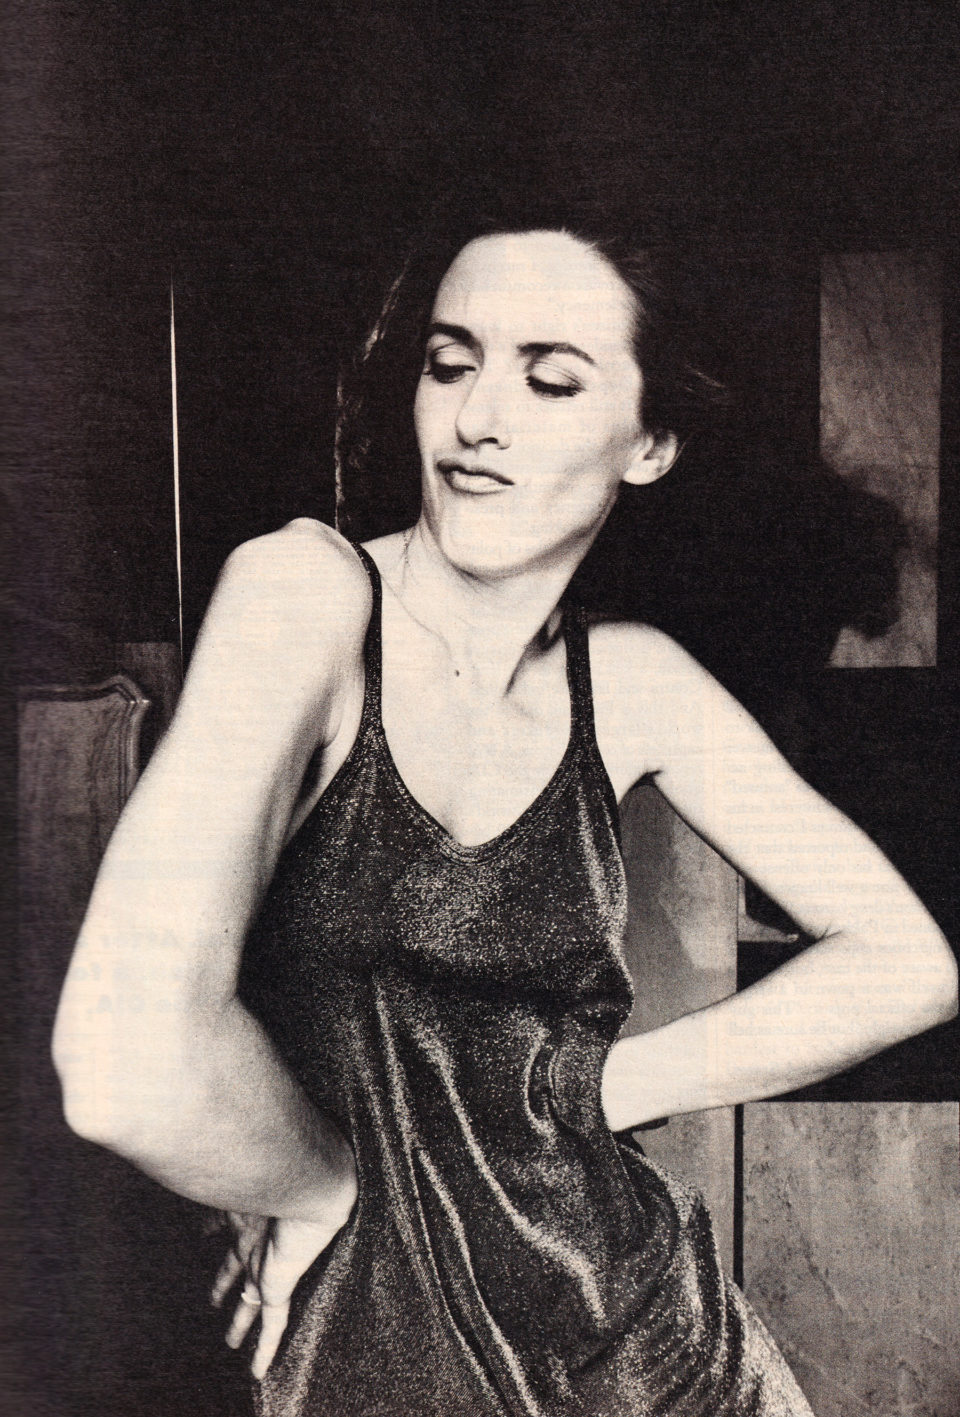 Liz Phair in 1994. Photo by Max Vadukel.